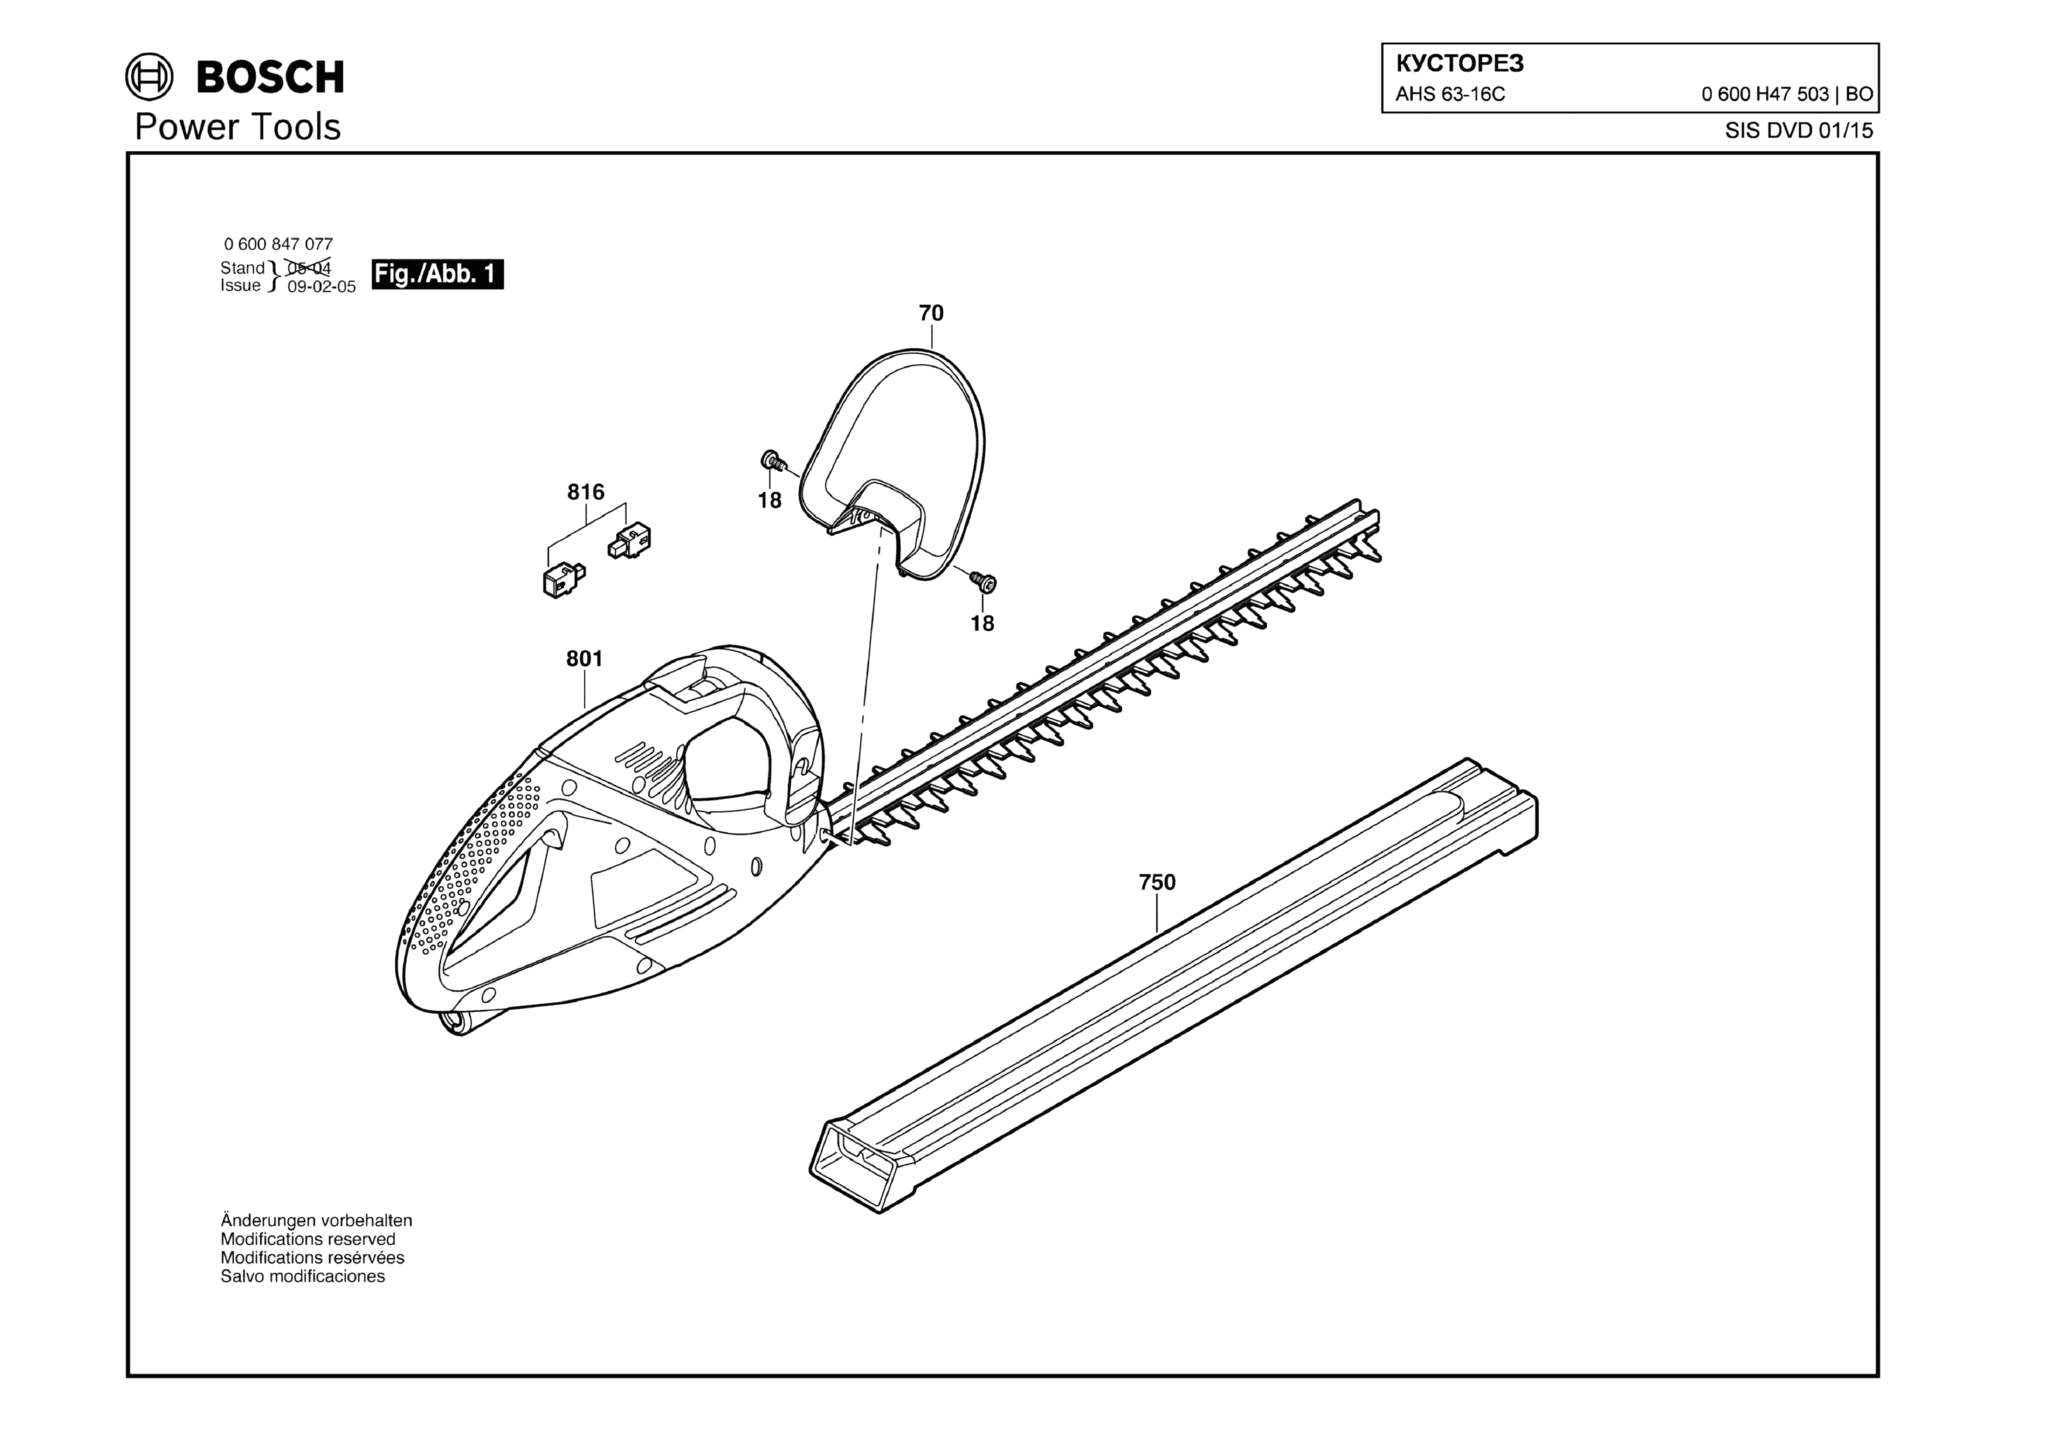 Запчасти, схема и деталировка Bosch AHS 63-16 C (ТИП 0600H47503)